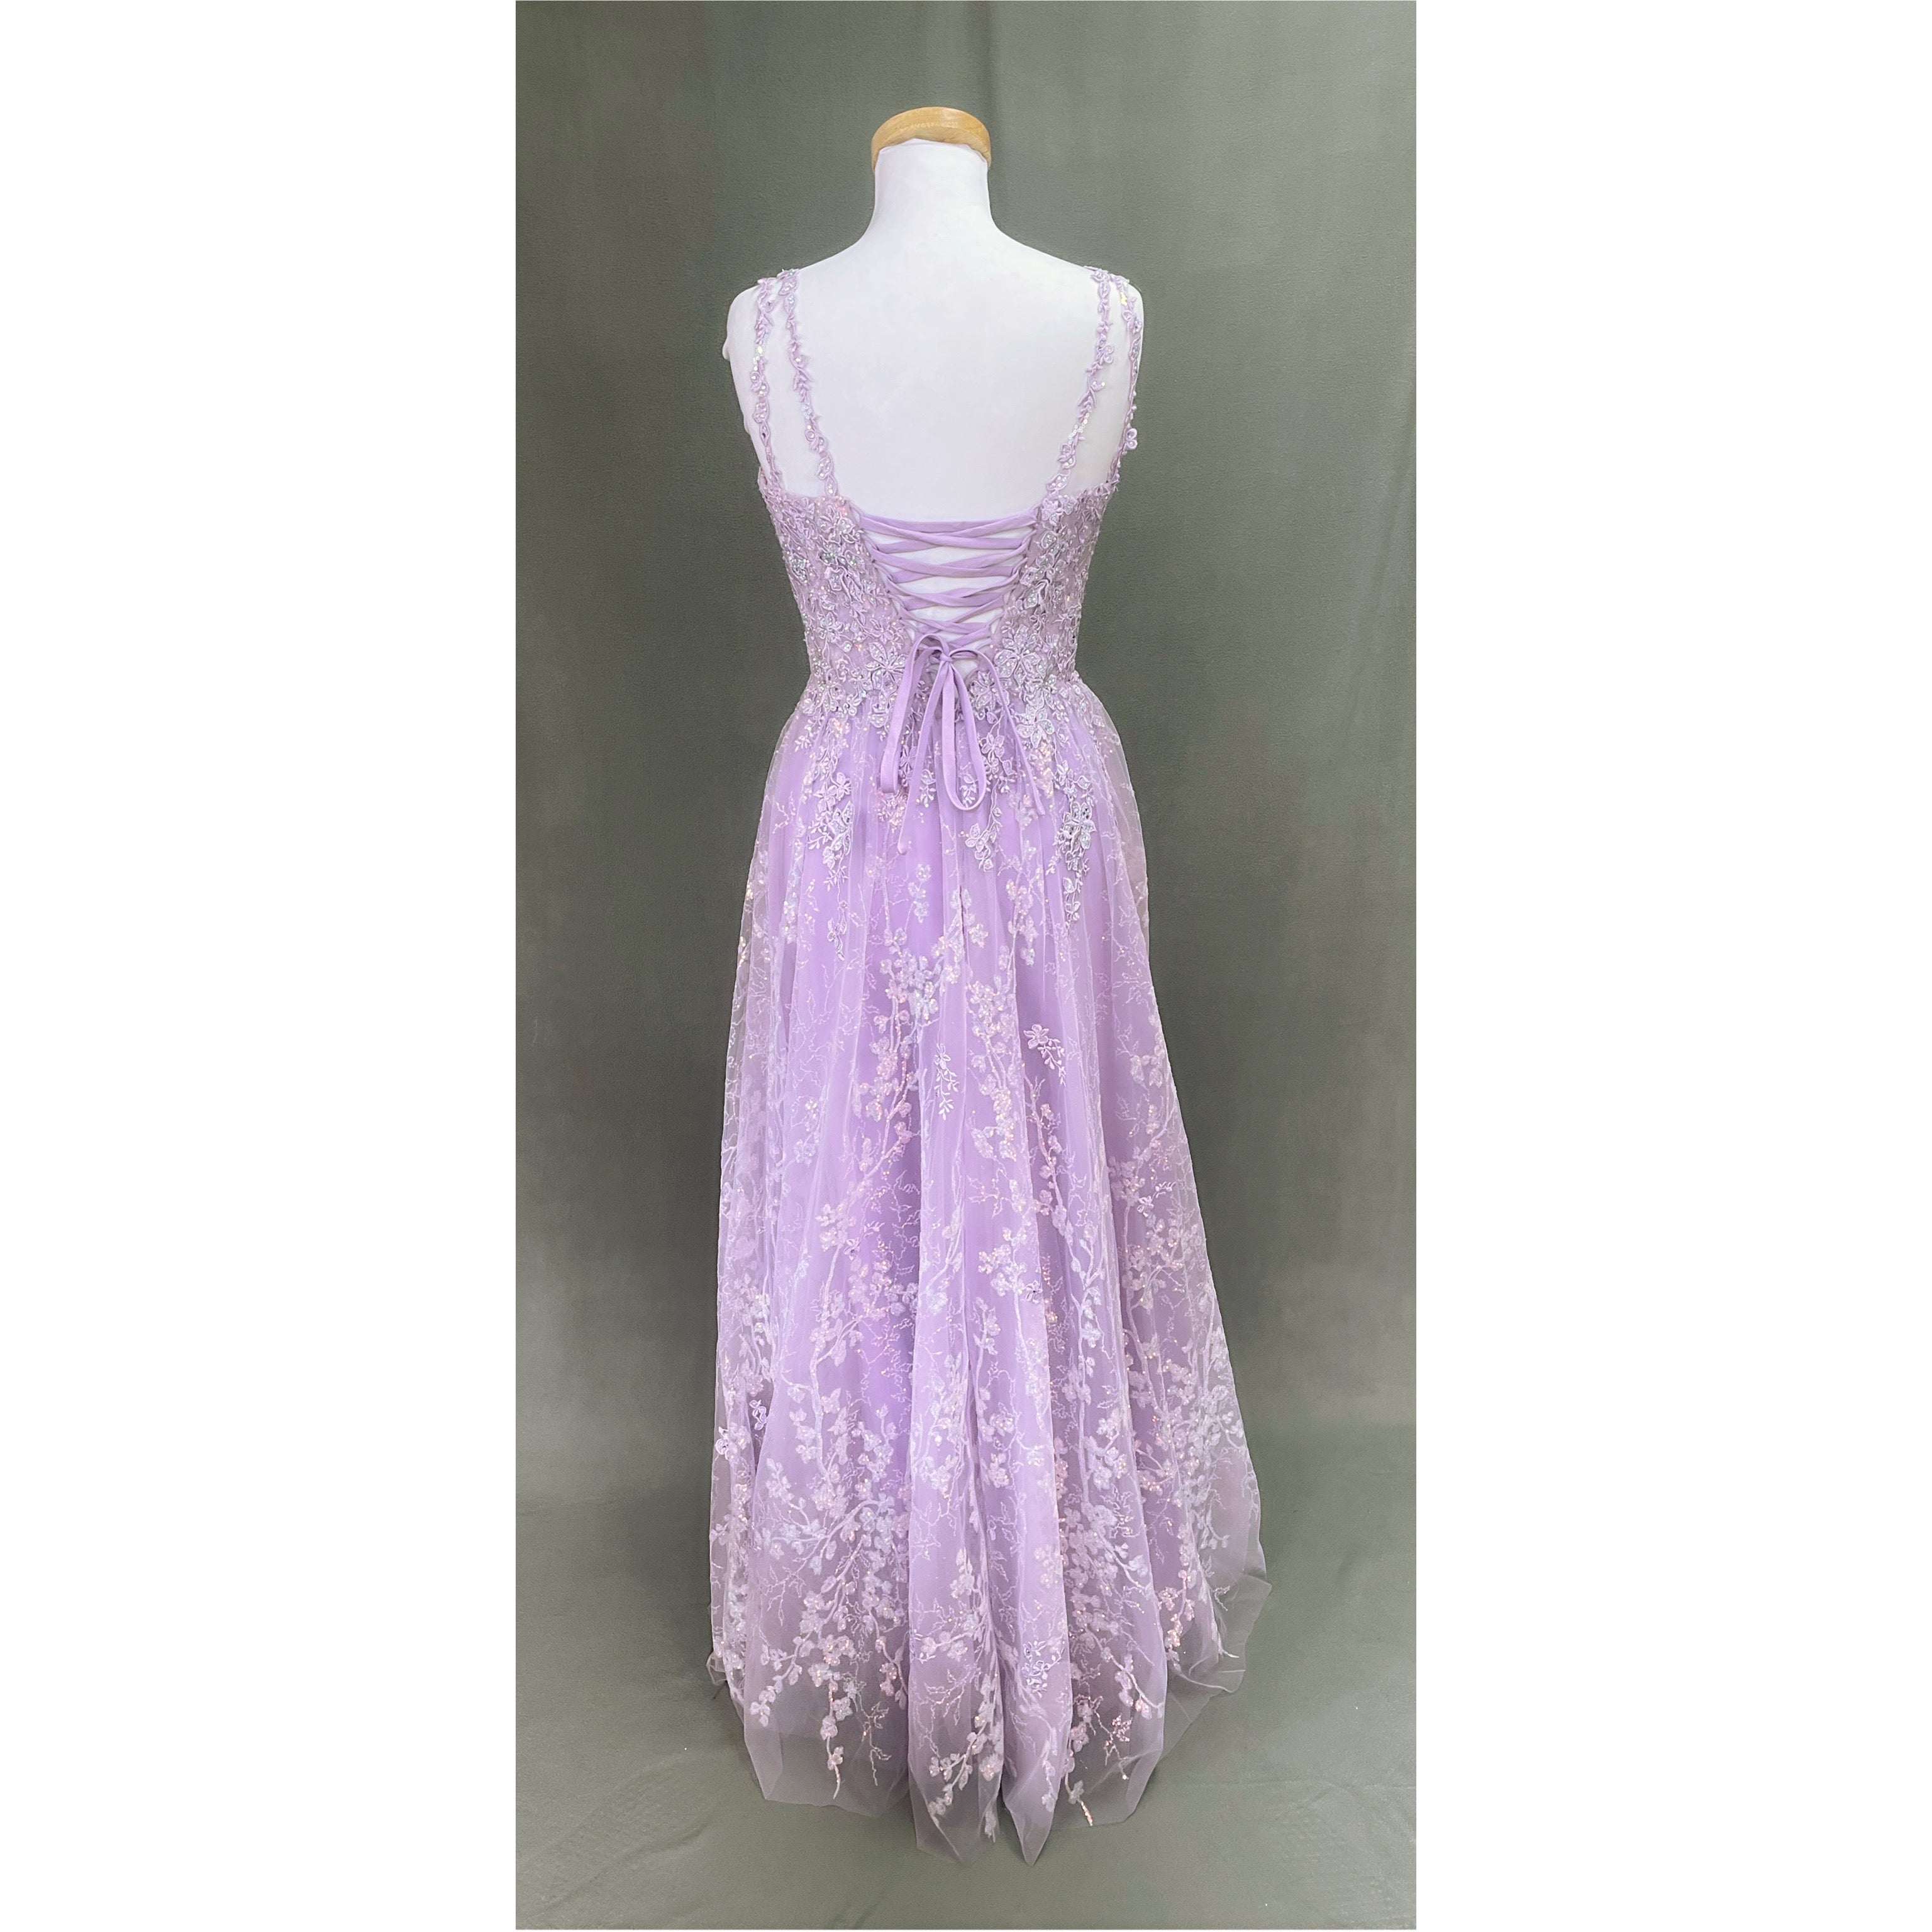 Ella Grace lavender dress, size 8